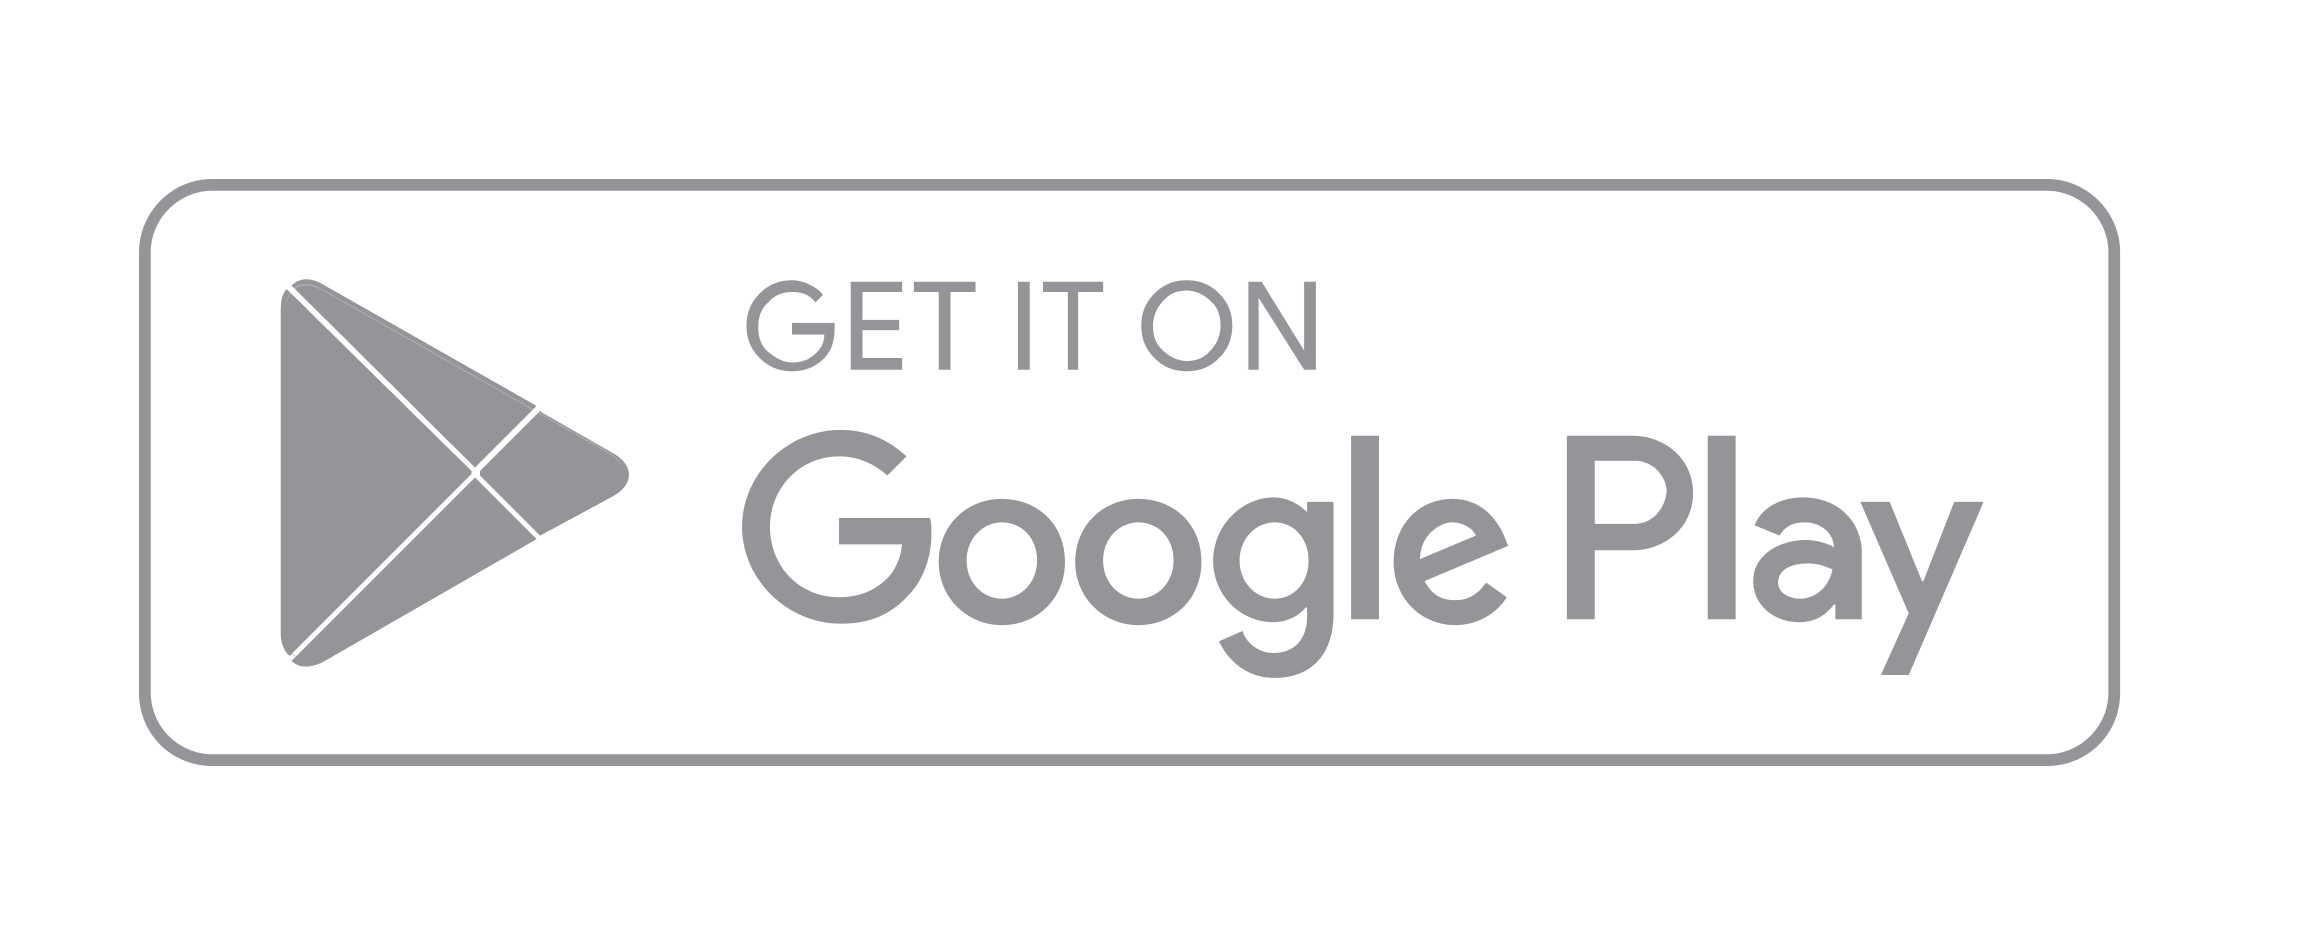 Google play 50. Гугл плей. Google Play logo. Get in Google Play. Доступно в Play Market.